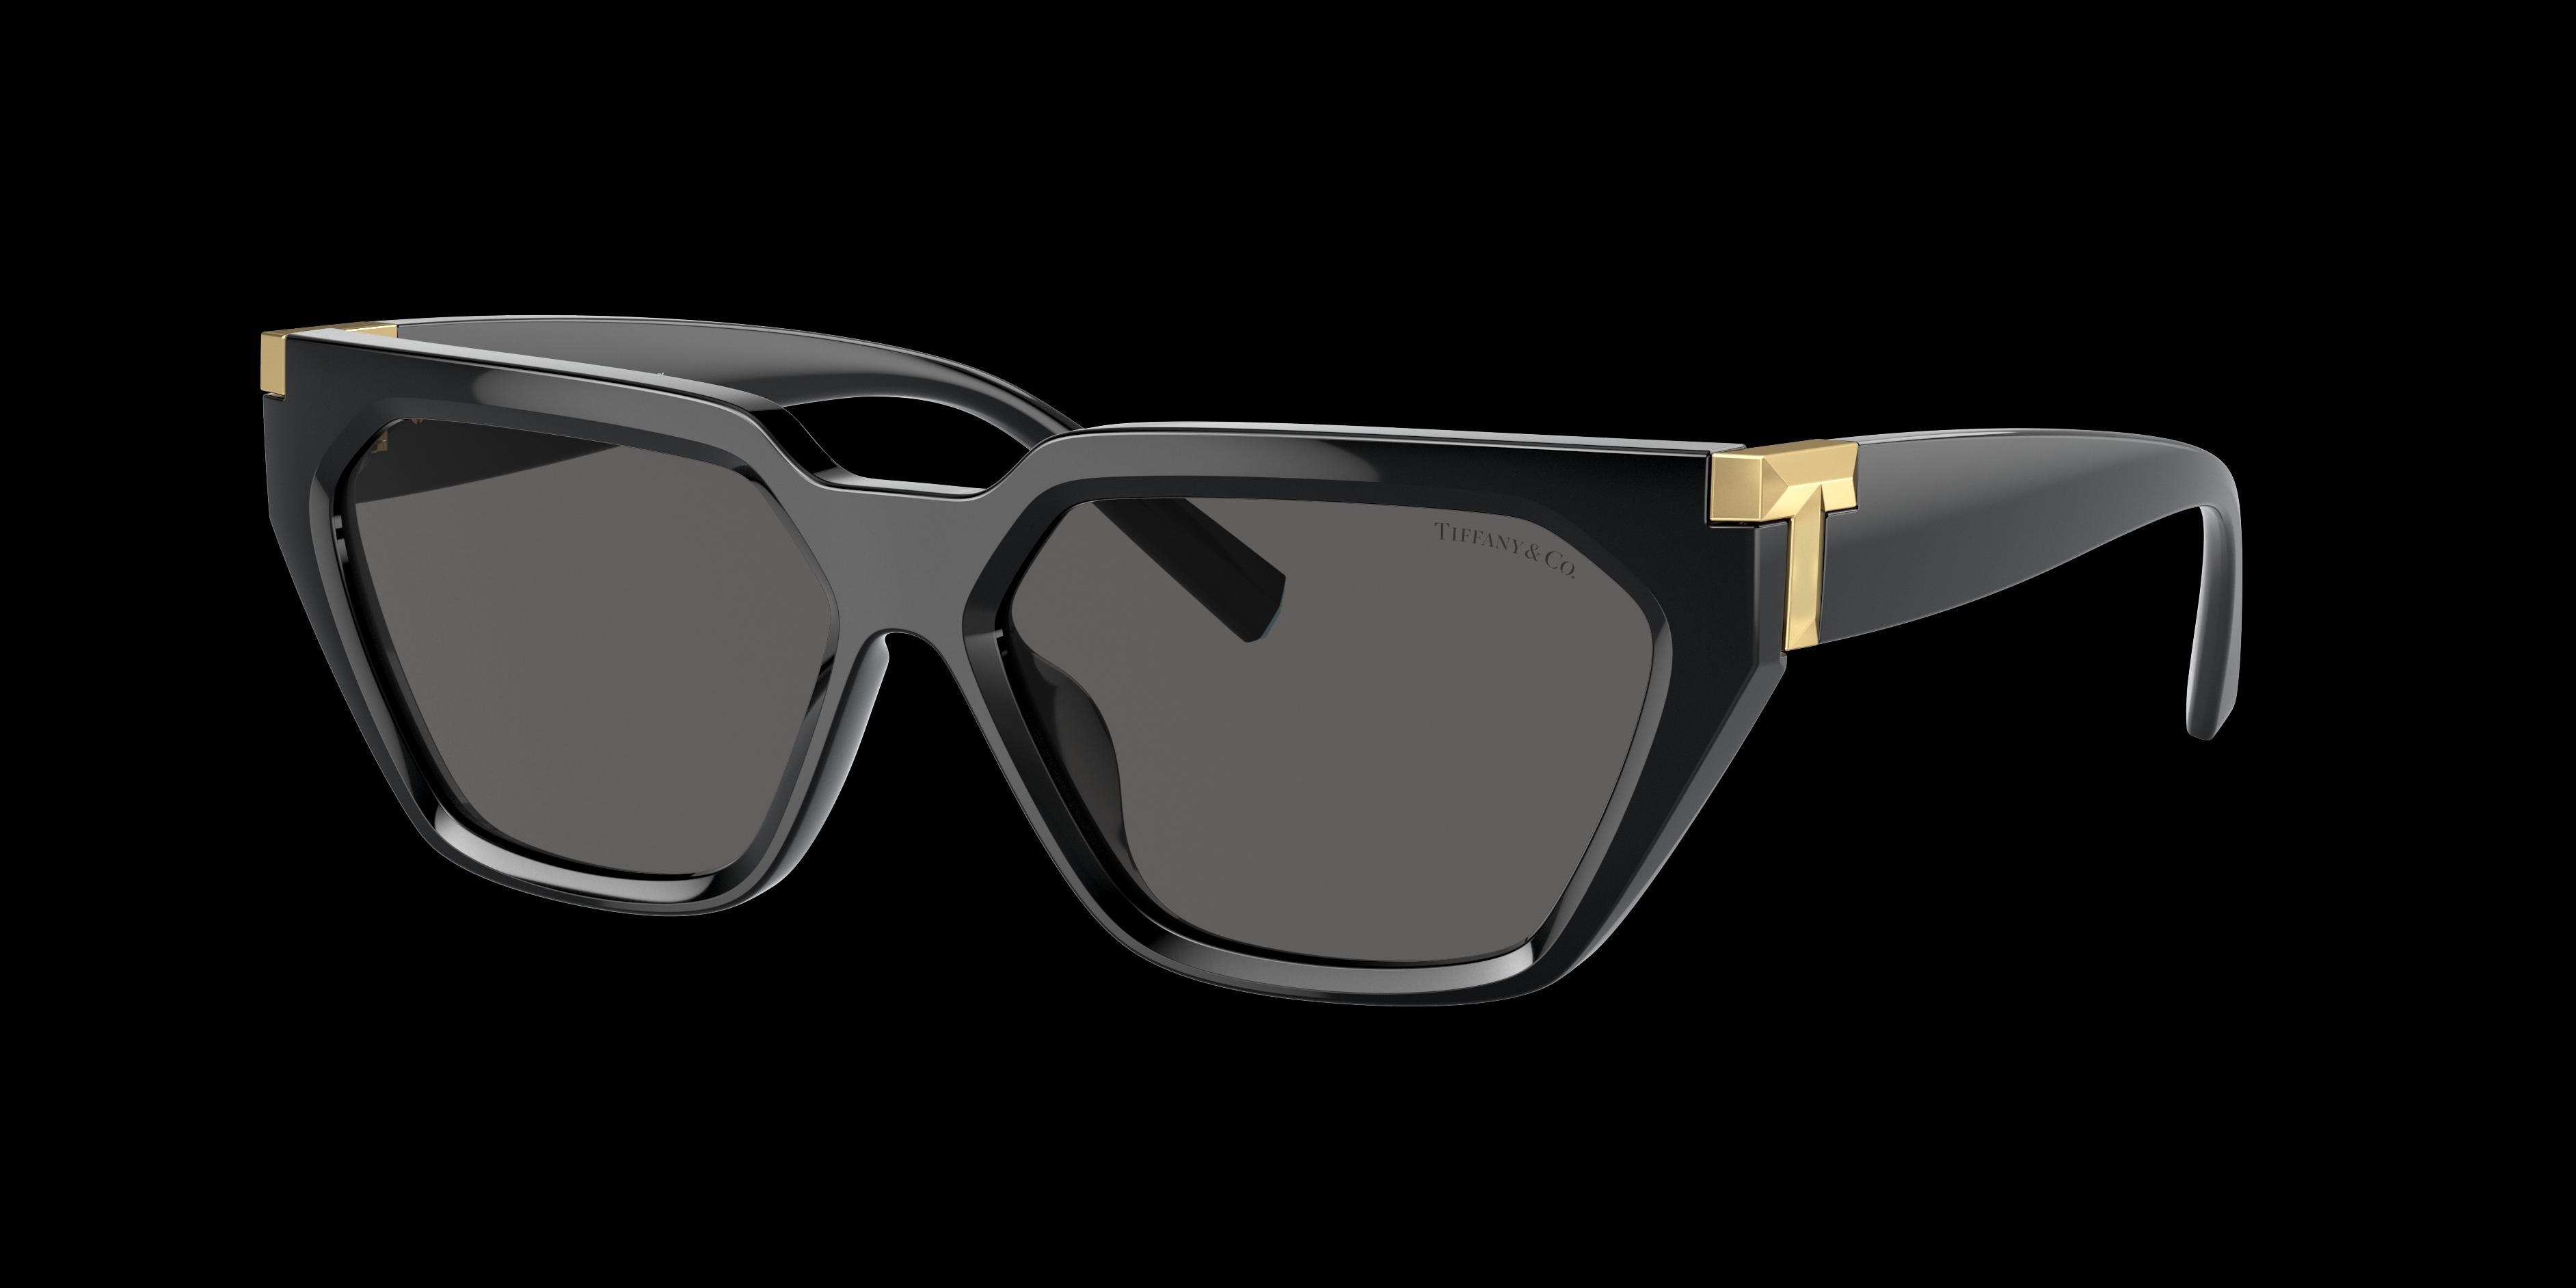 Tiffany & Co. 56mm Irregular Sunglasses Product Image